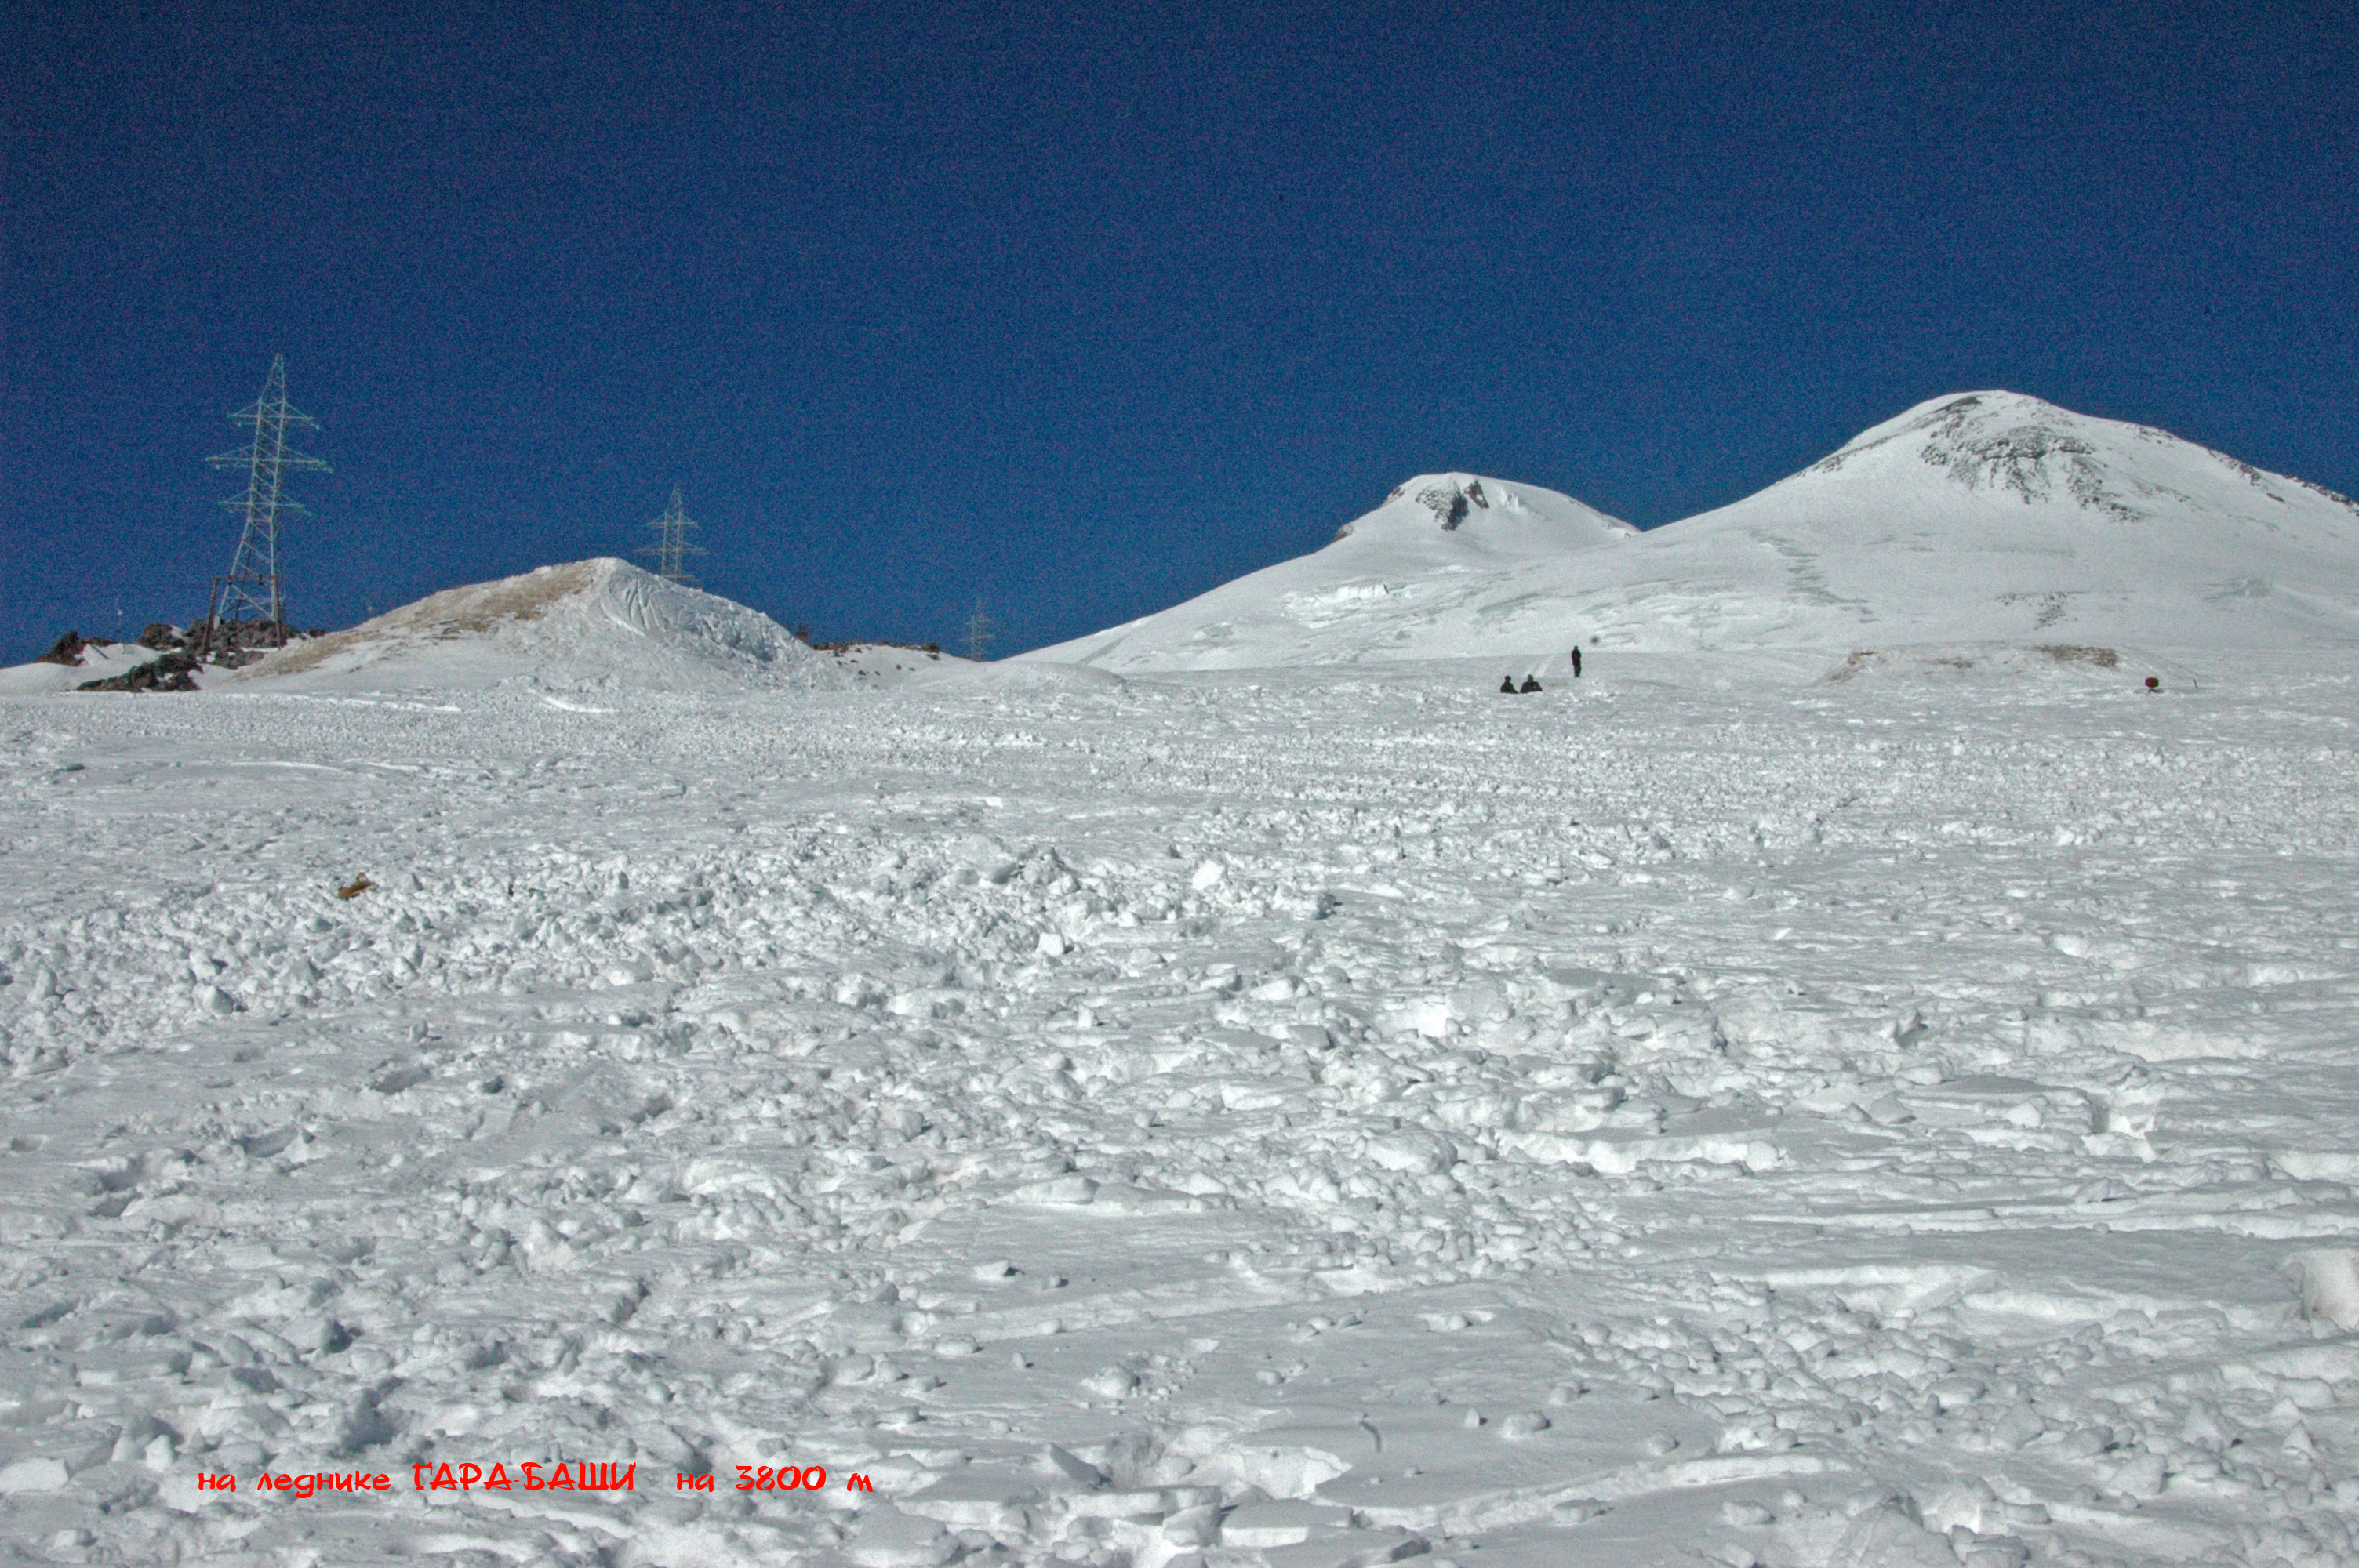 Ледник Гара Баши 3800, (Gara Bashi 3800 m)